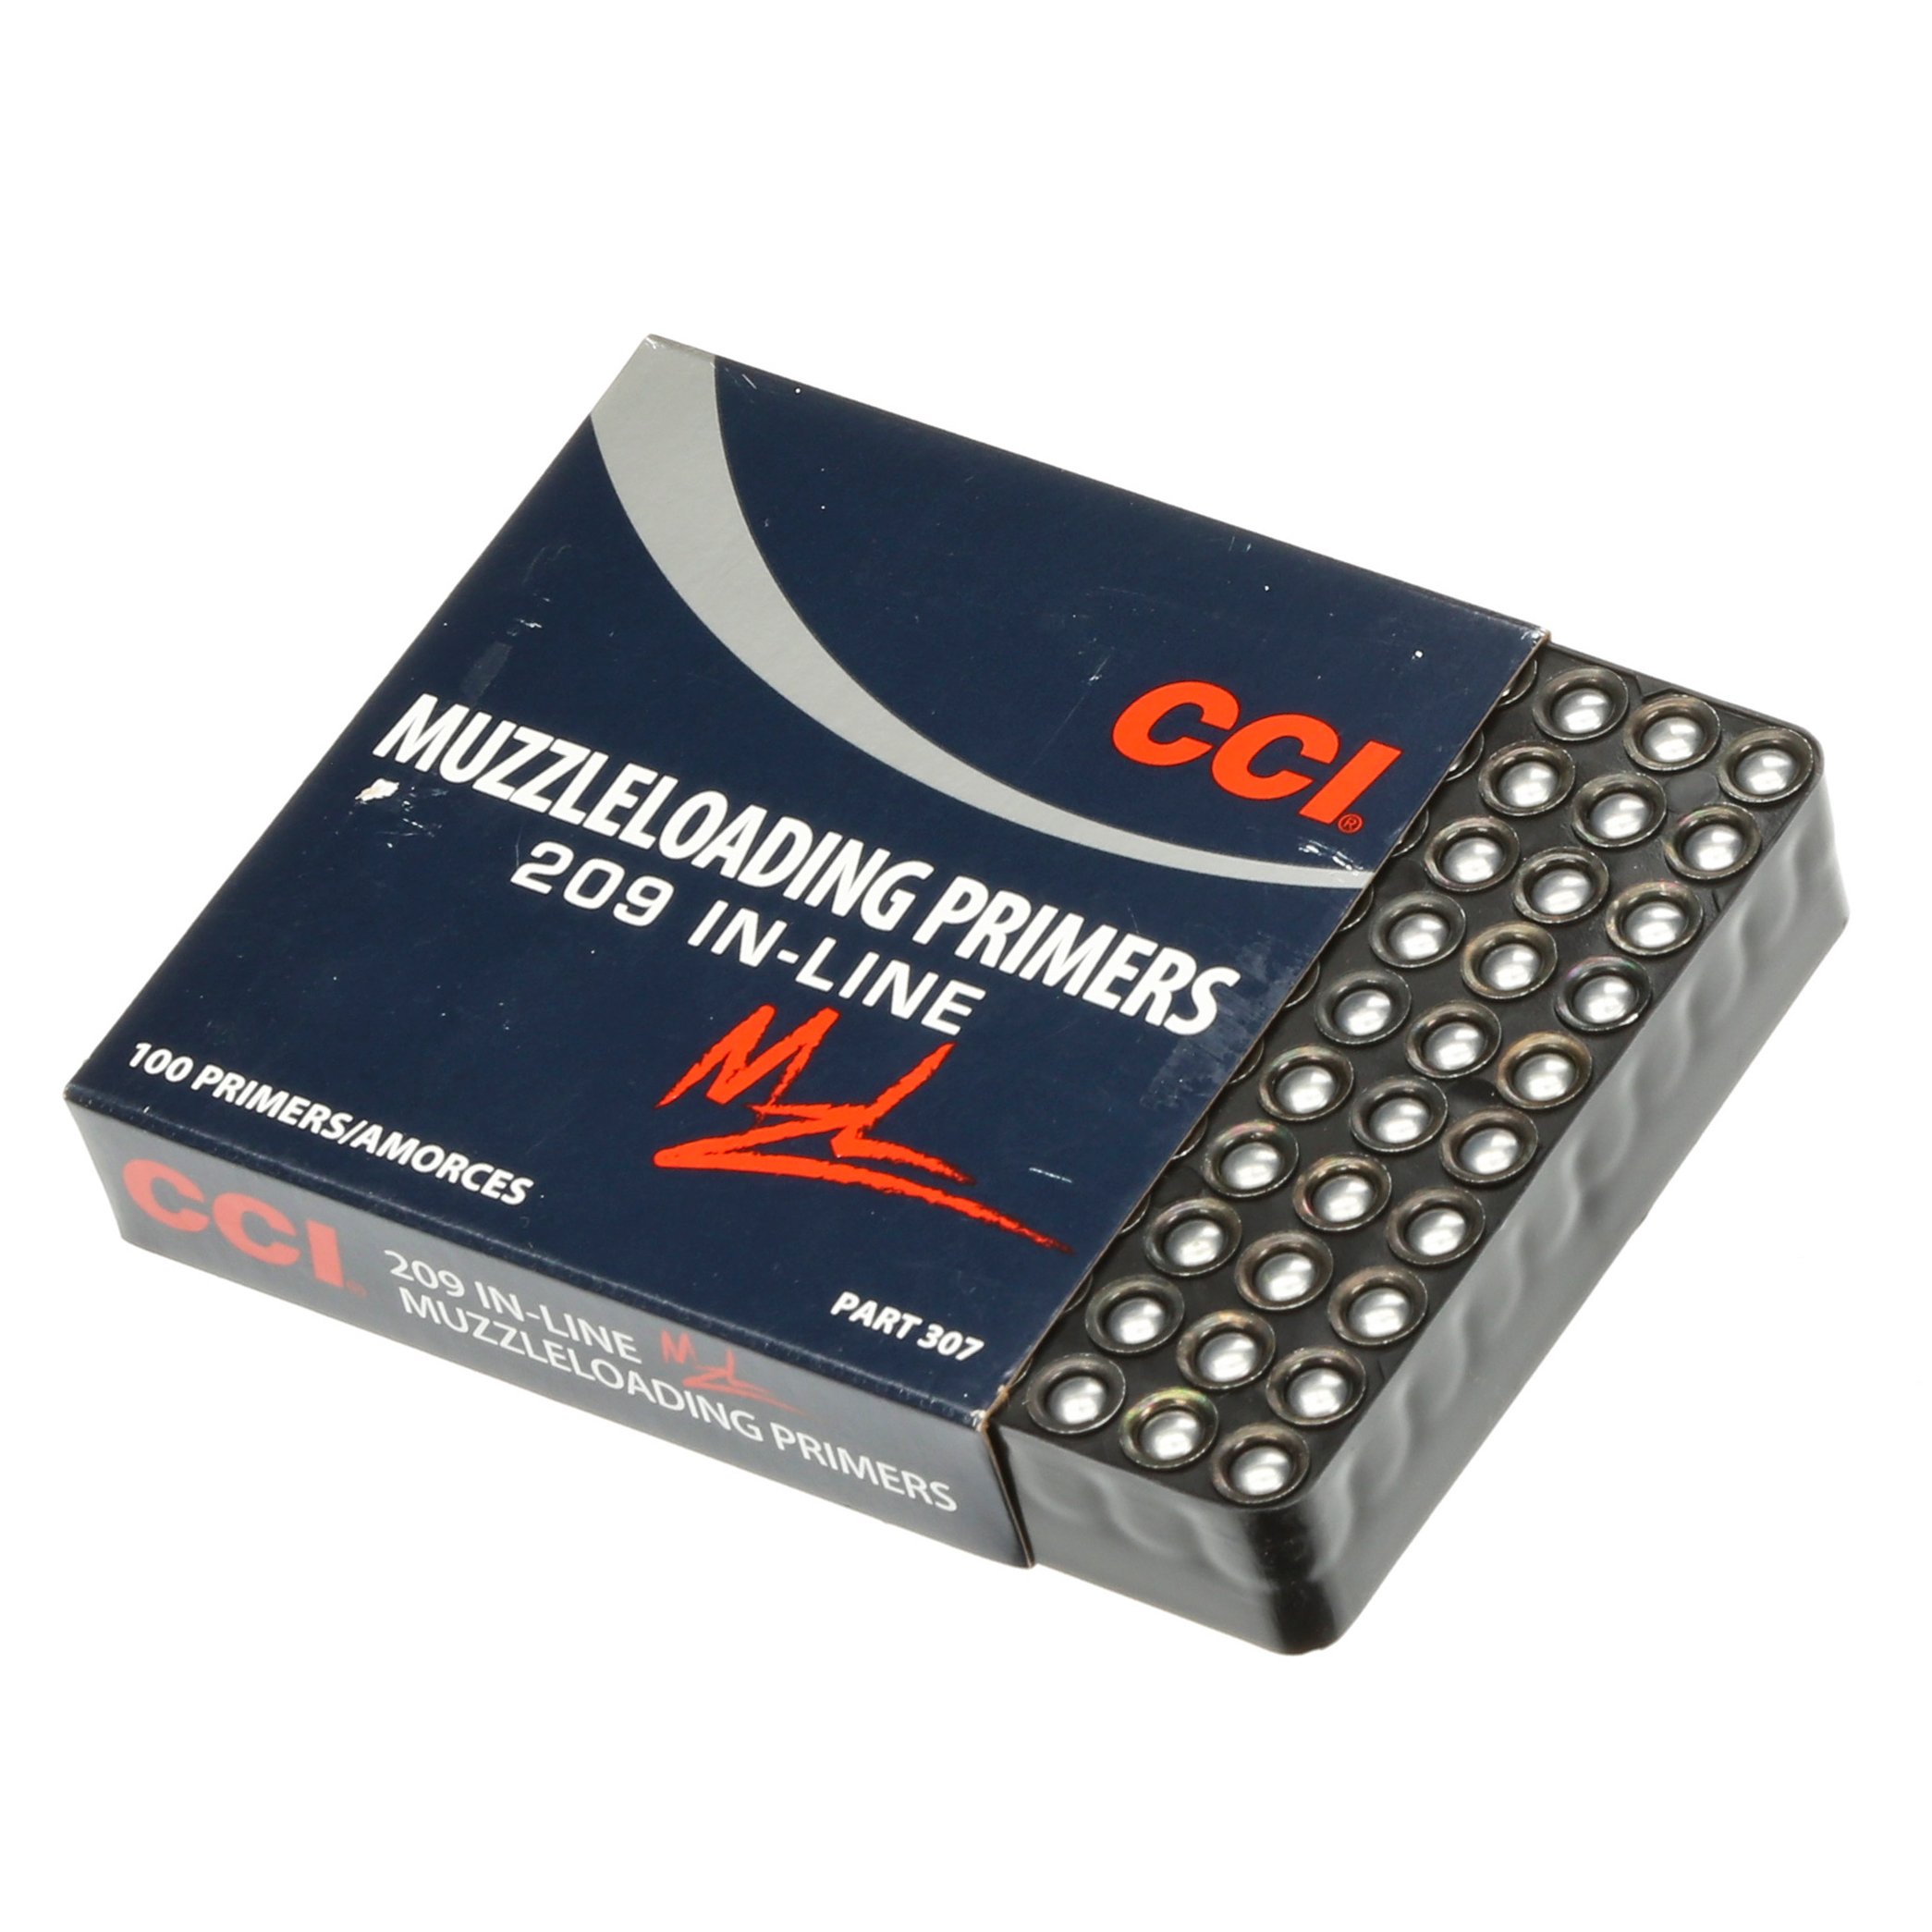 CCI 209 Primers Muzzleloading Box of 100 - Top Gun Hawk